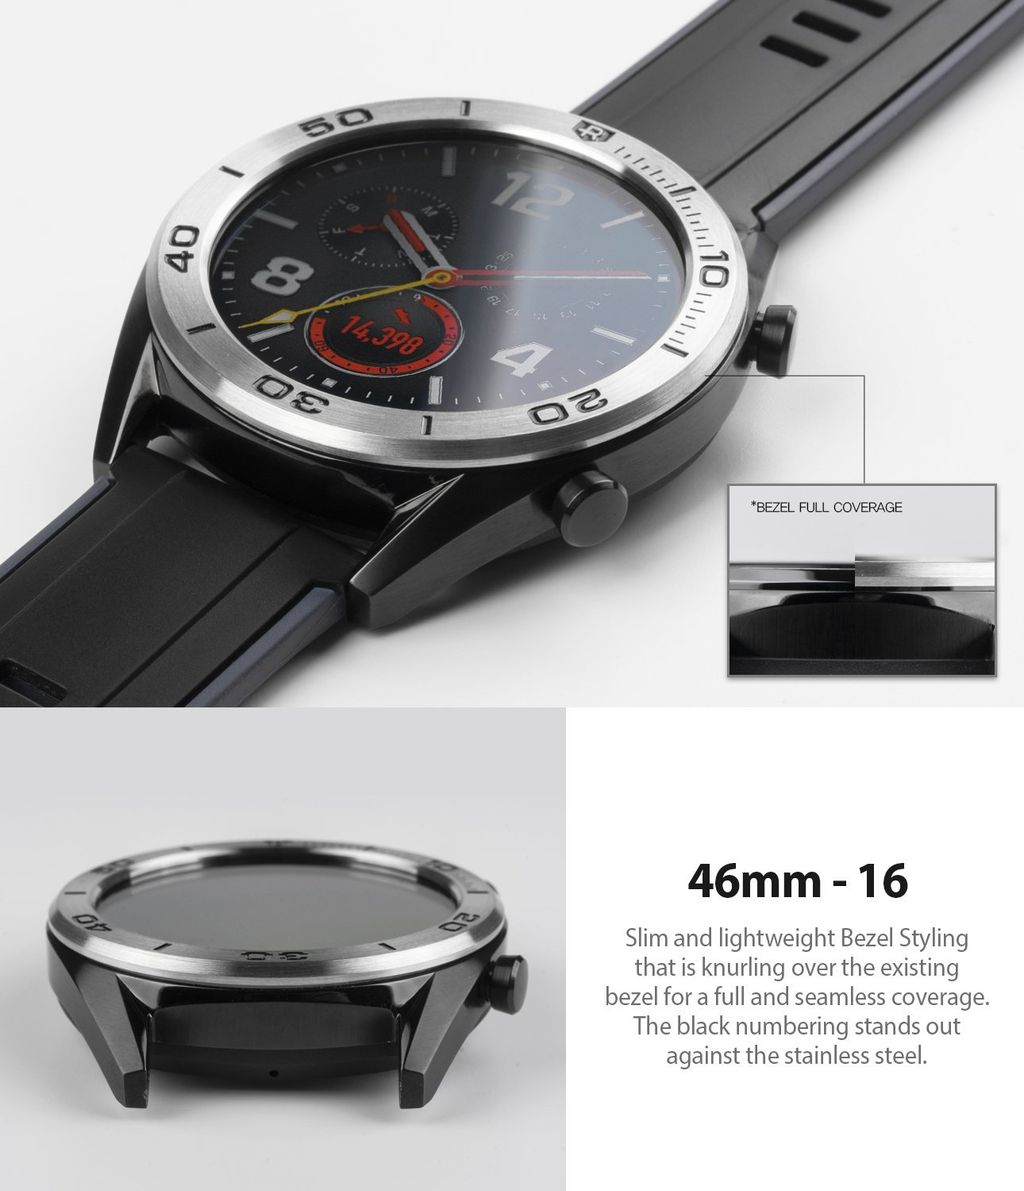 Ringke_Bezel_Styling_Huawei_Watch_GT_46mm_sub_thum_16_photo_ENG_1400x.jpg